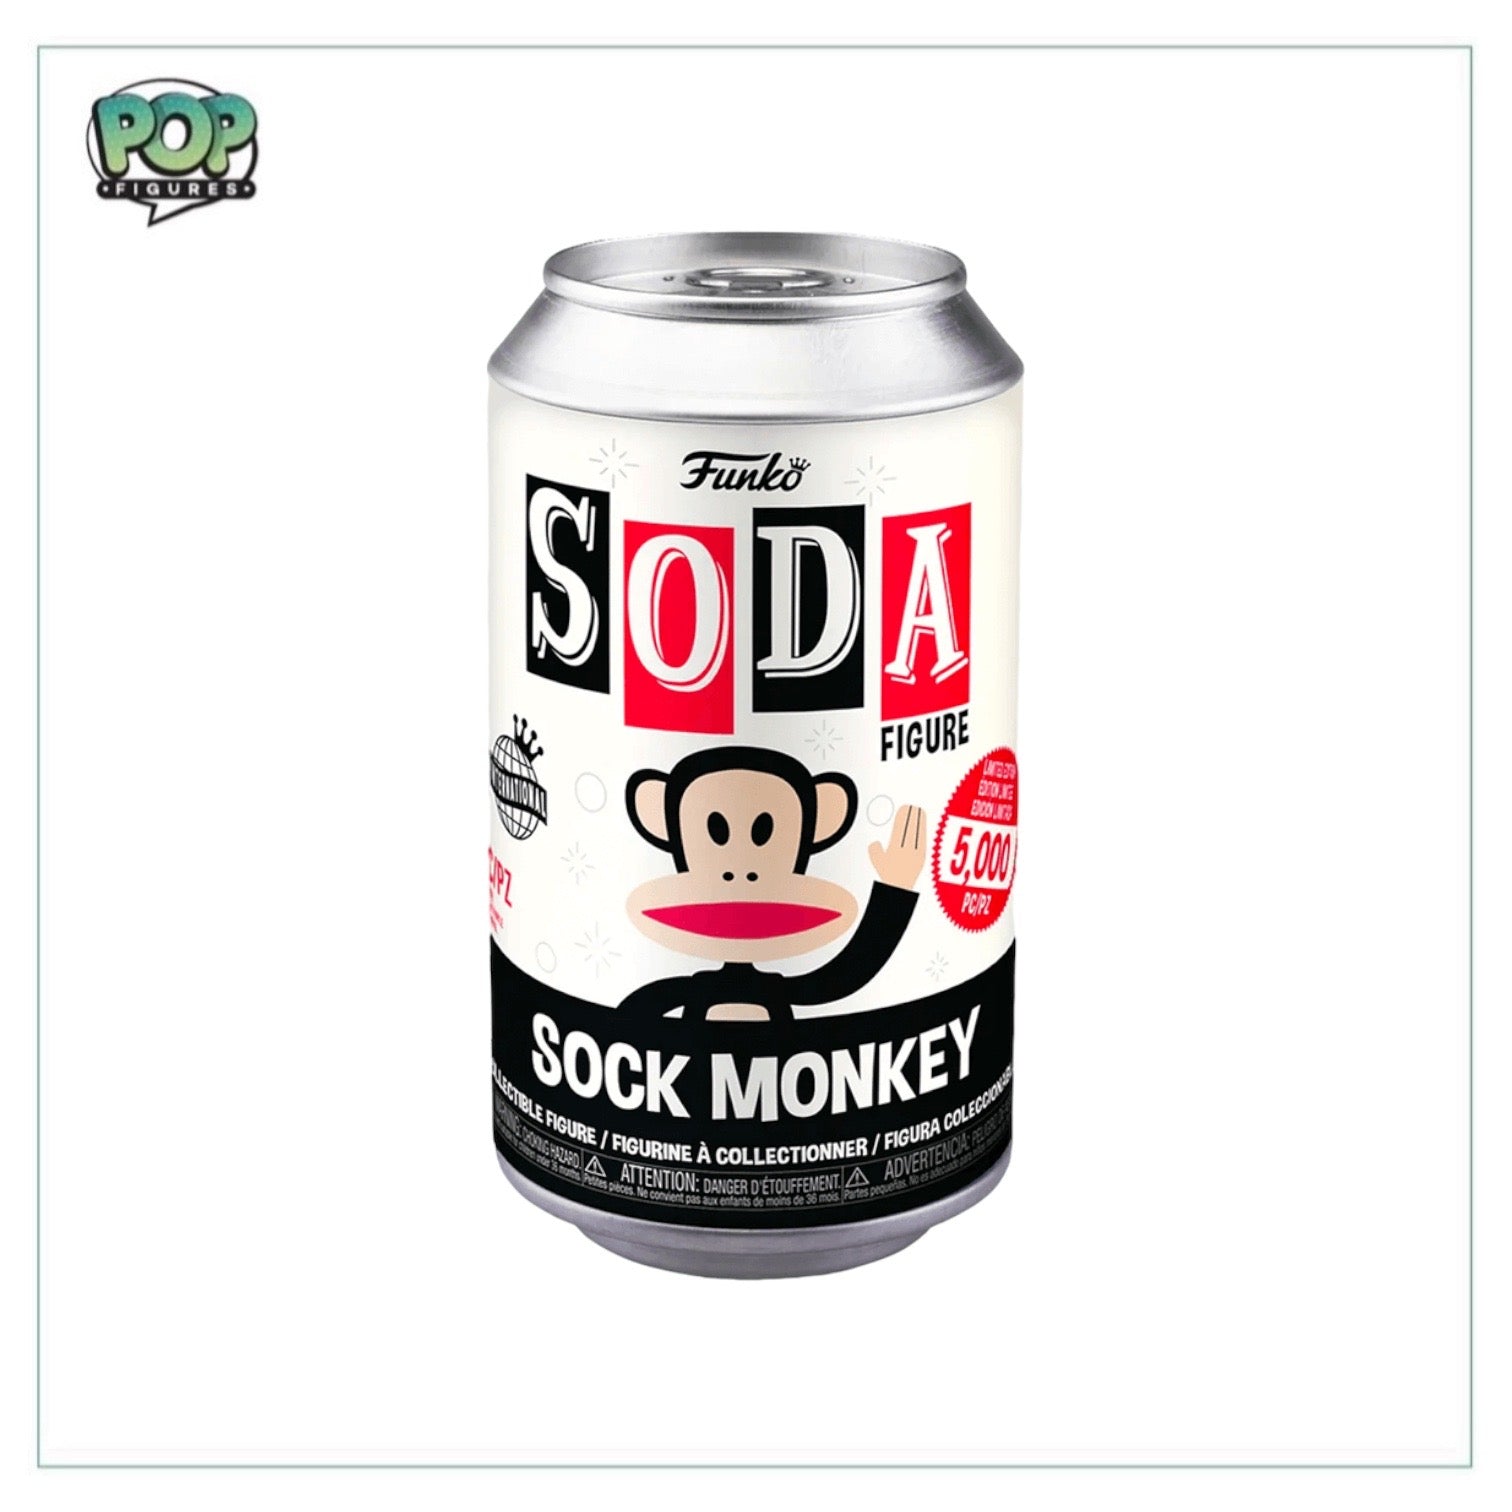 Sock Monkey Funko Soda Vinyl Figure! - Paul Frank - International LE5000 Pcs - Chance of Chase